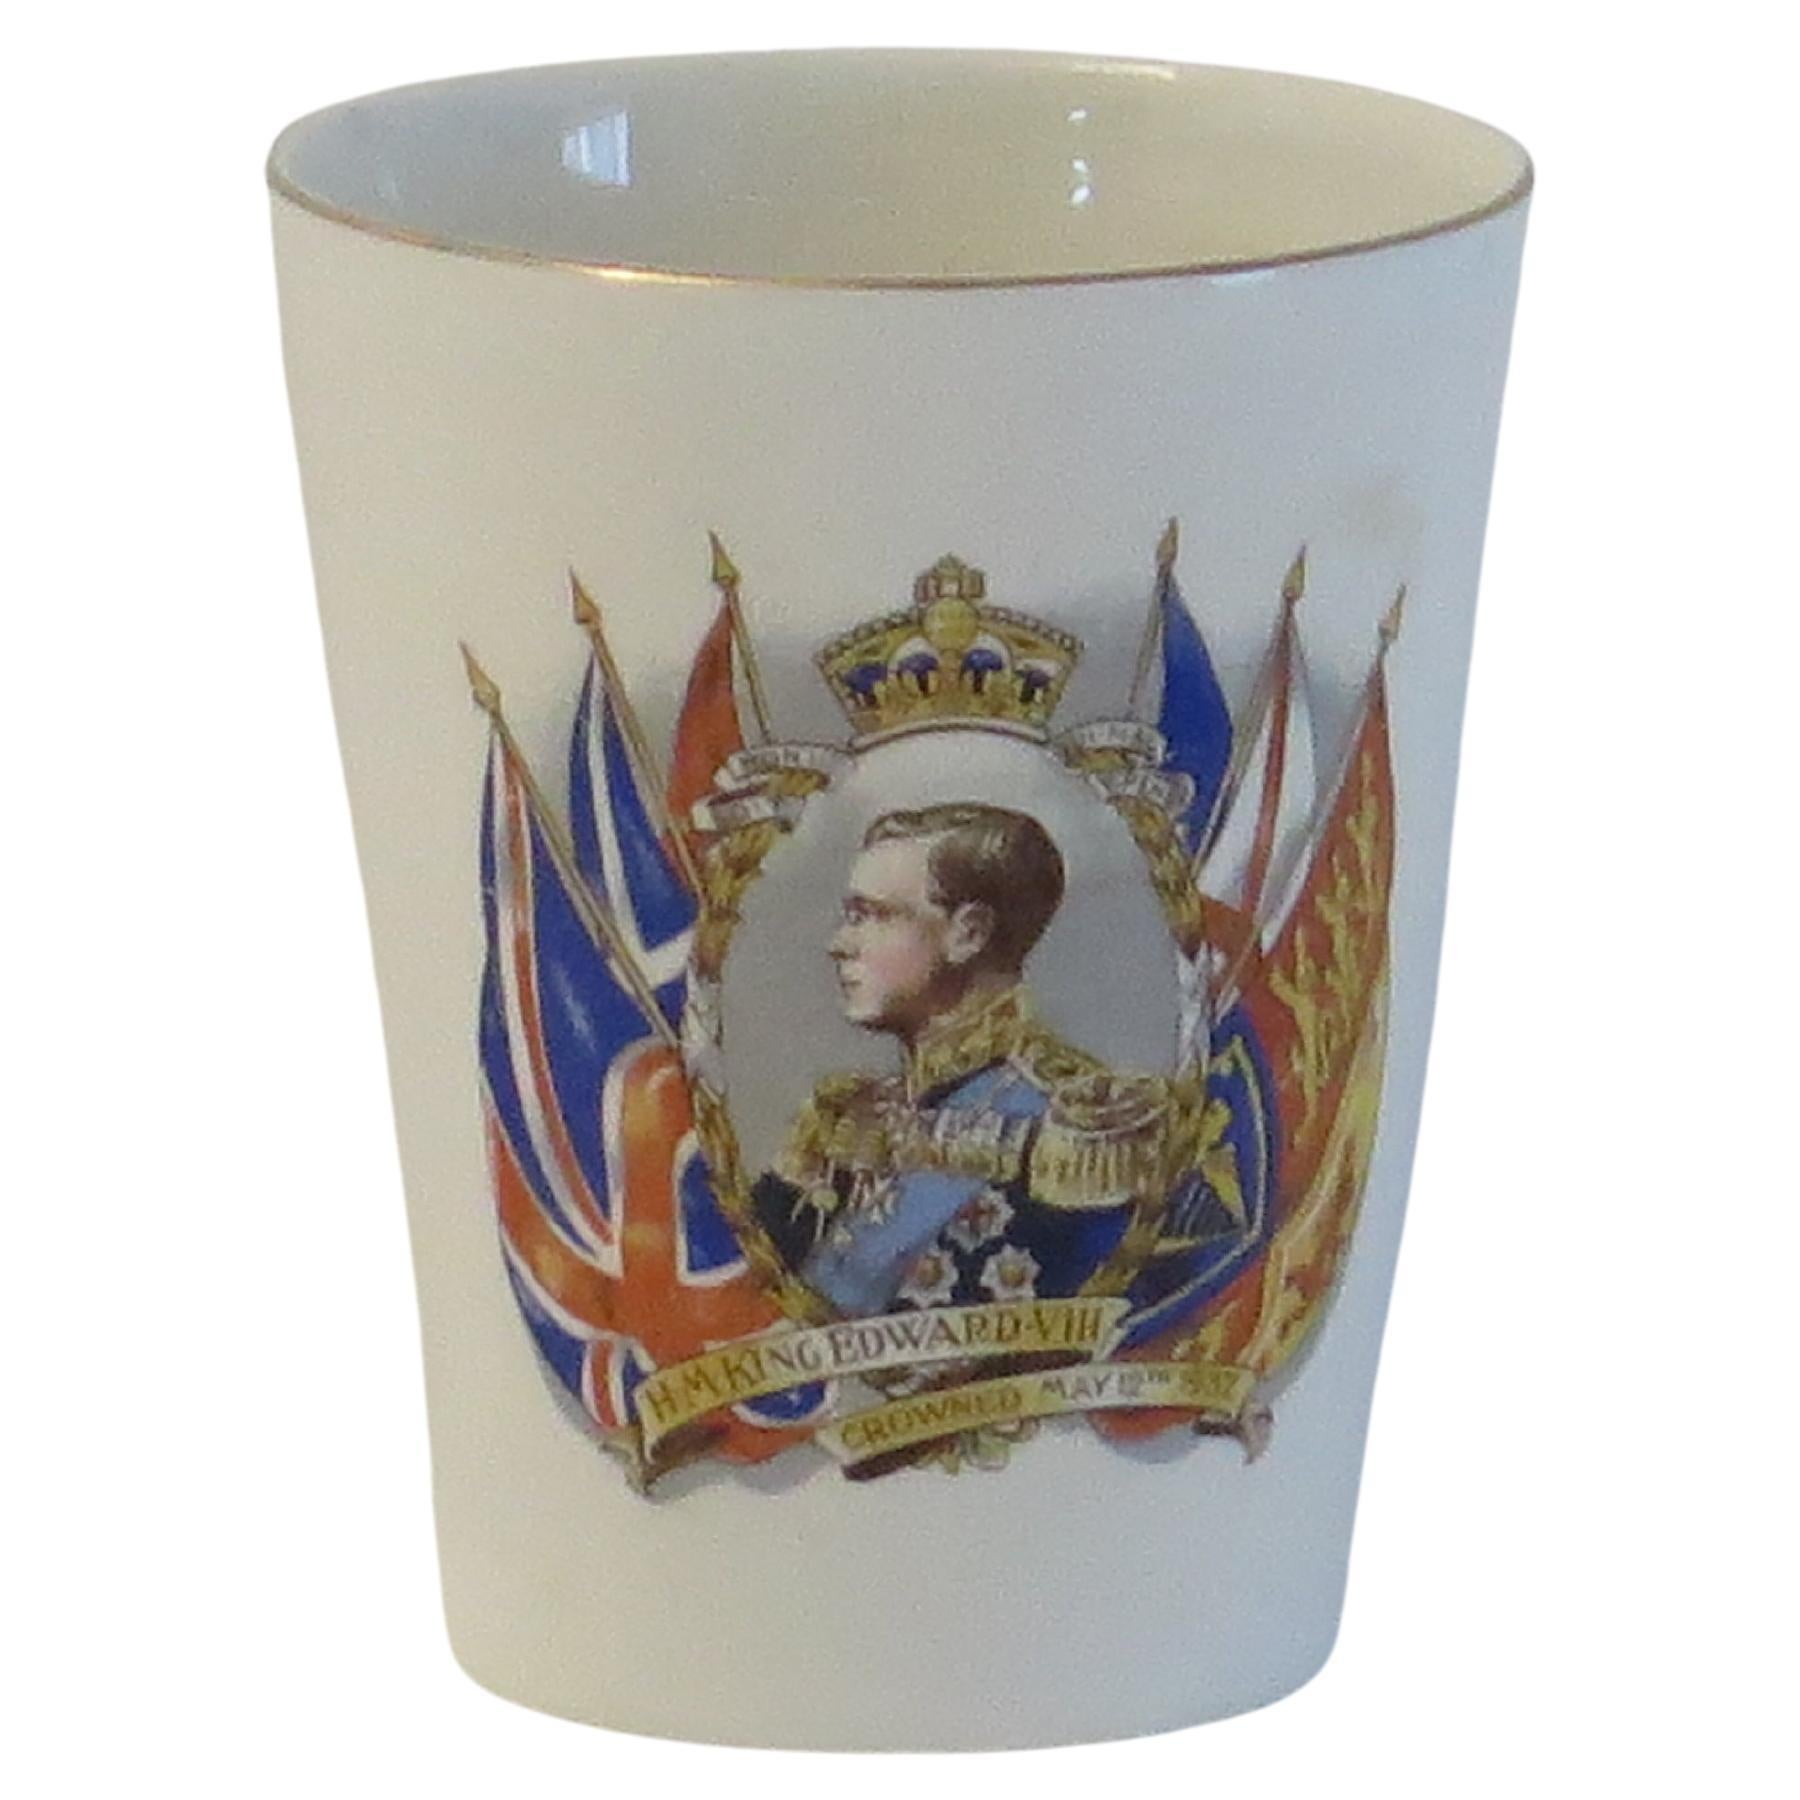 King Edward V111  Royal Commemorative Pottery Beaker, May 12th 1937